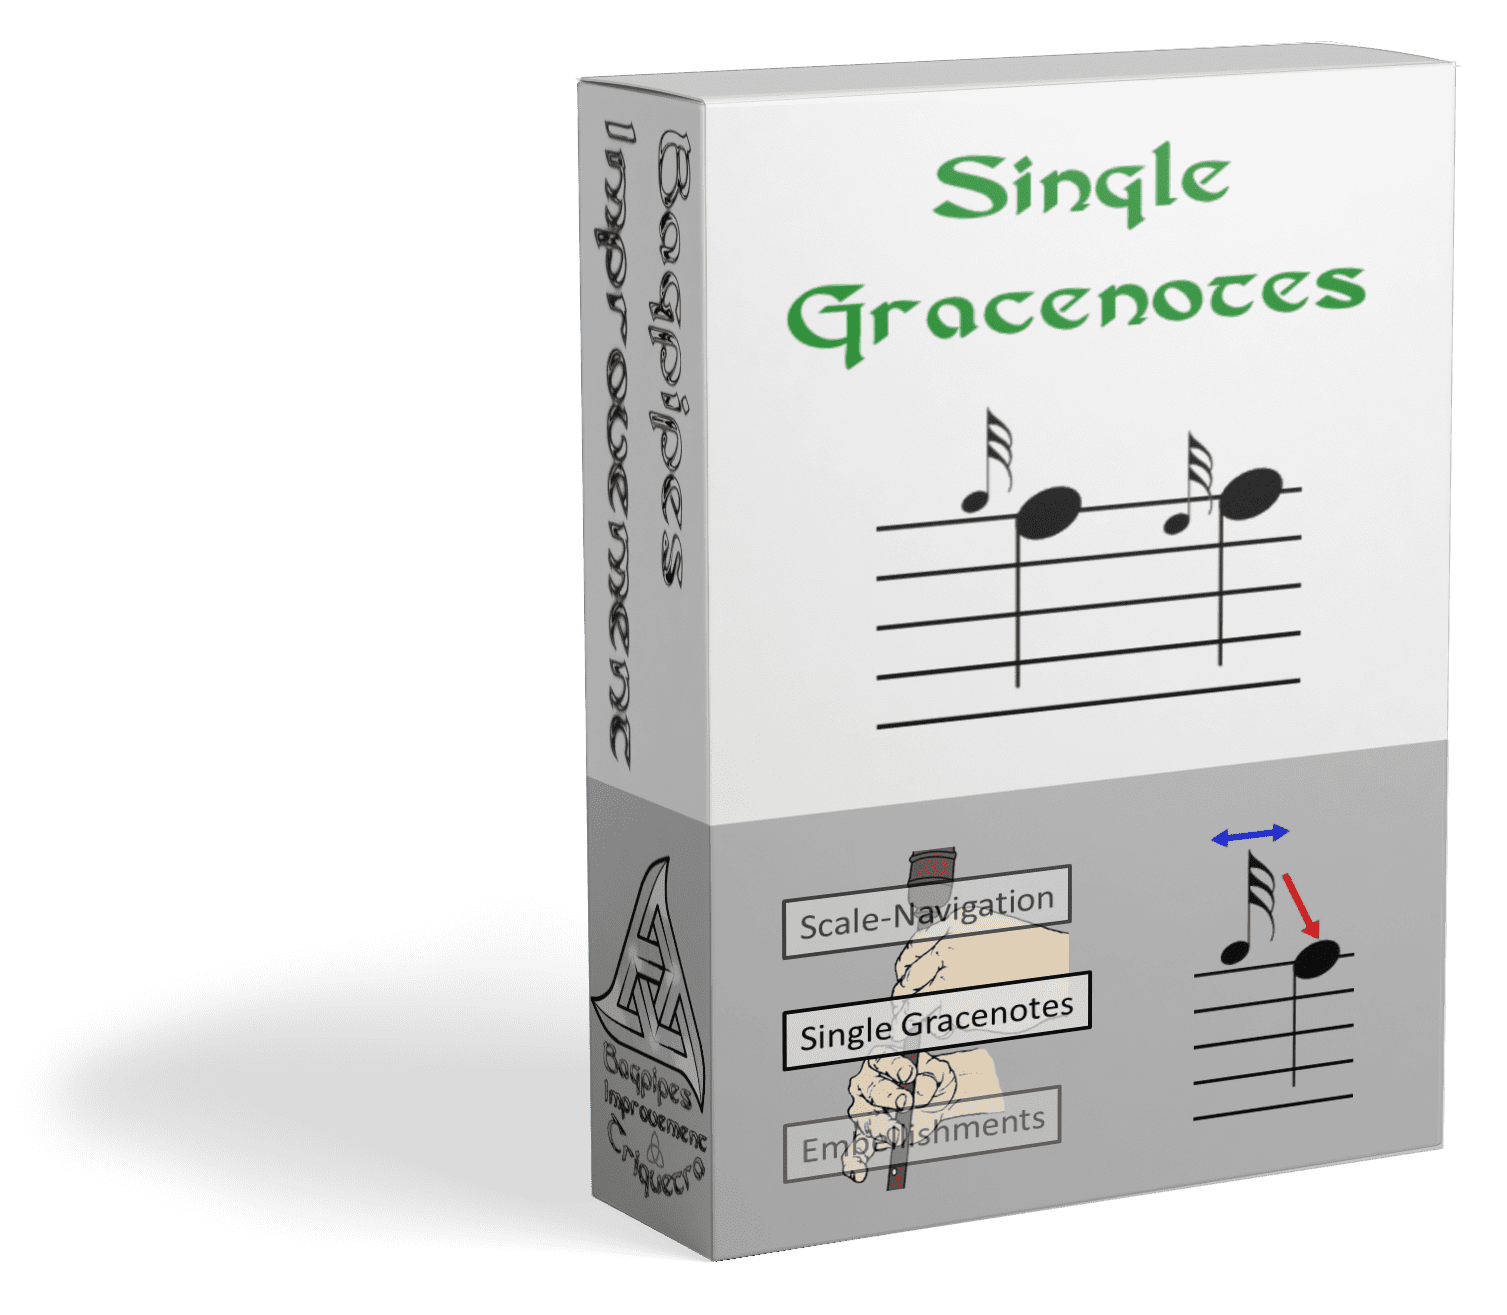 Gracenotes